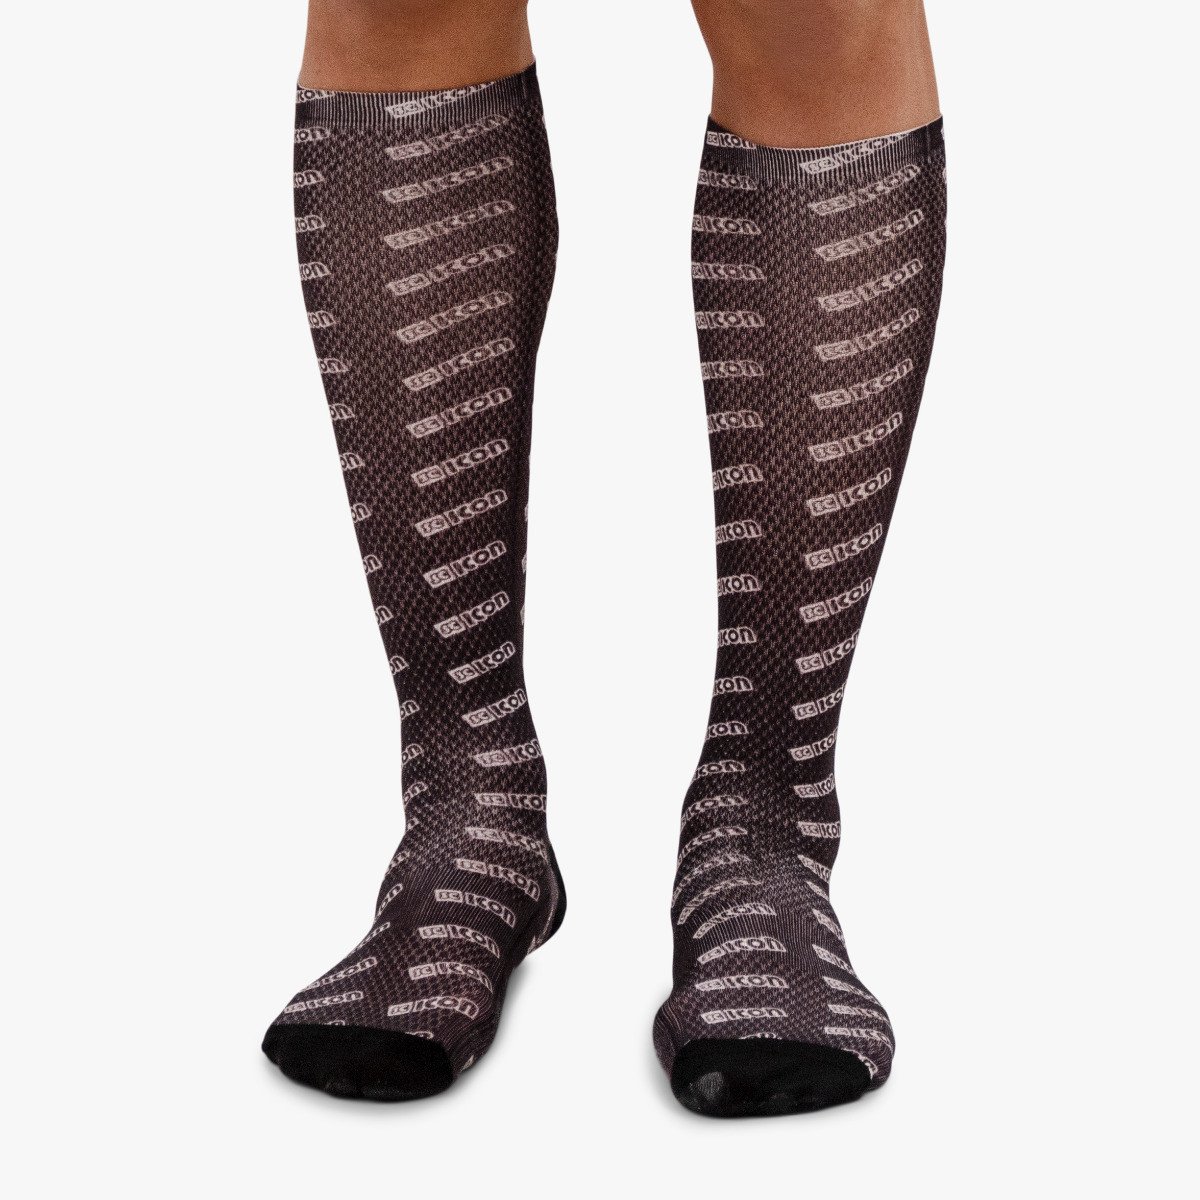 knee high socks compression unisex black scicon socks219